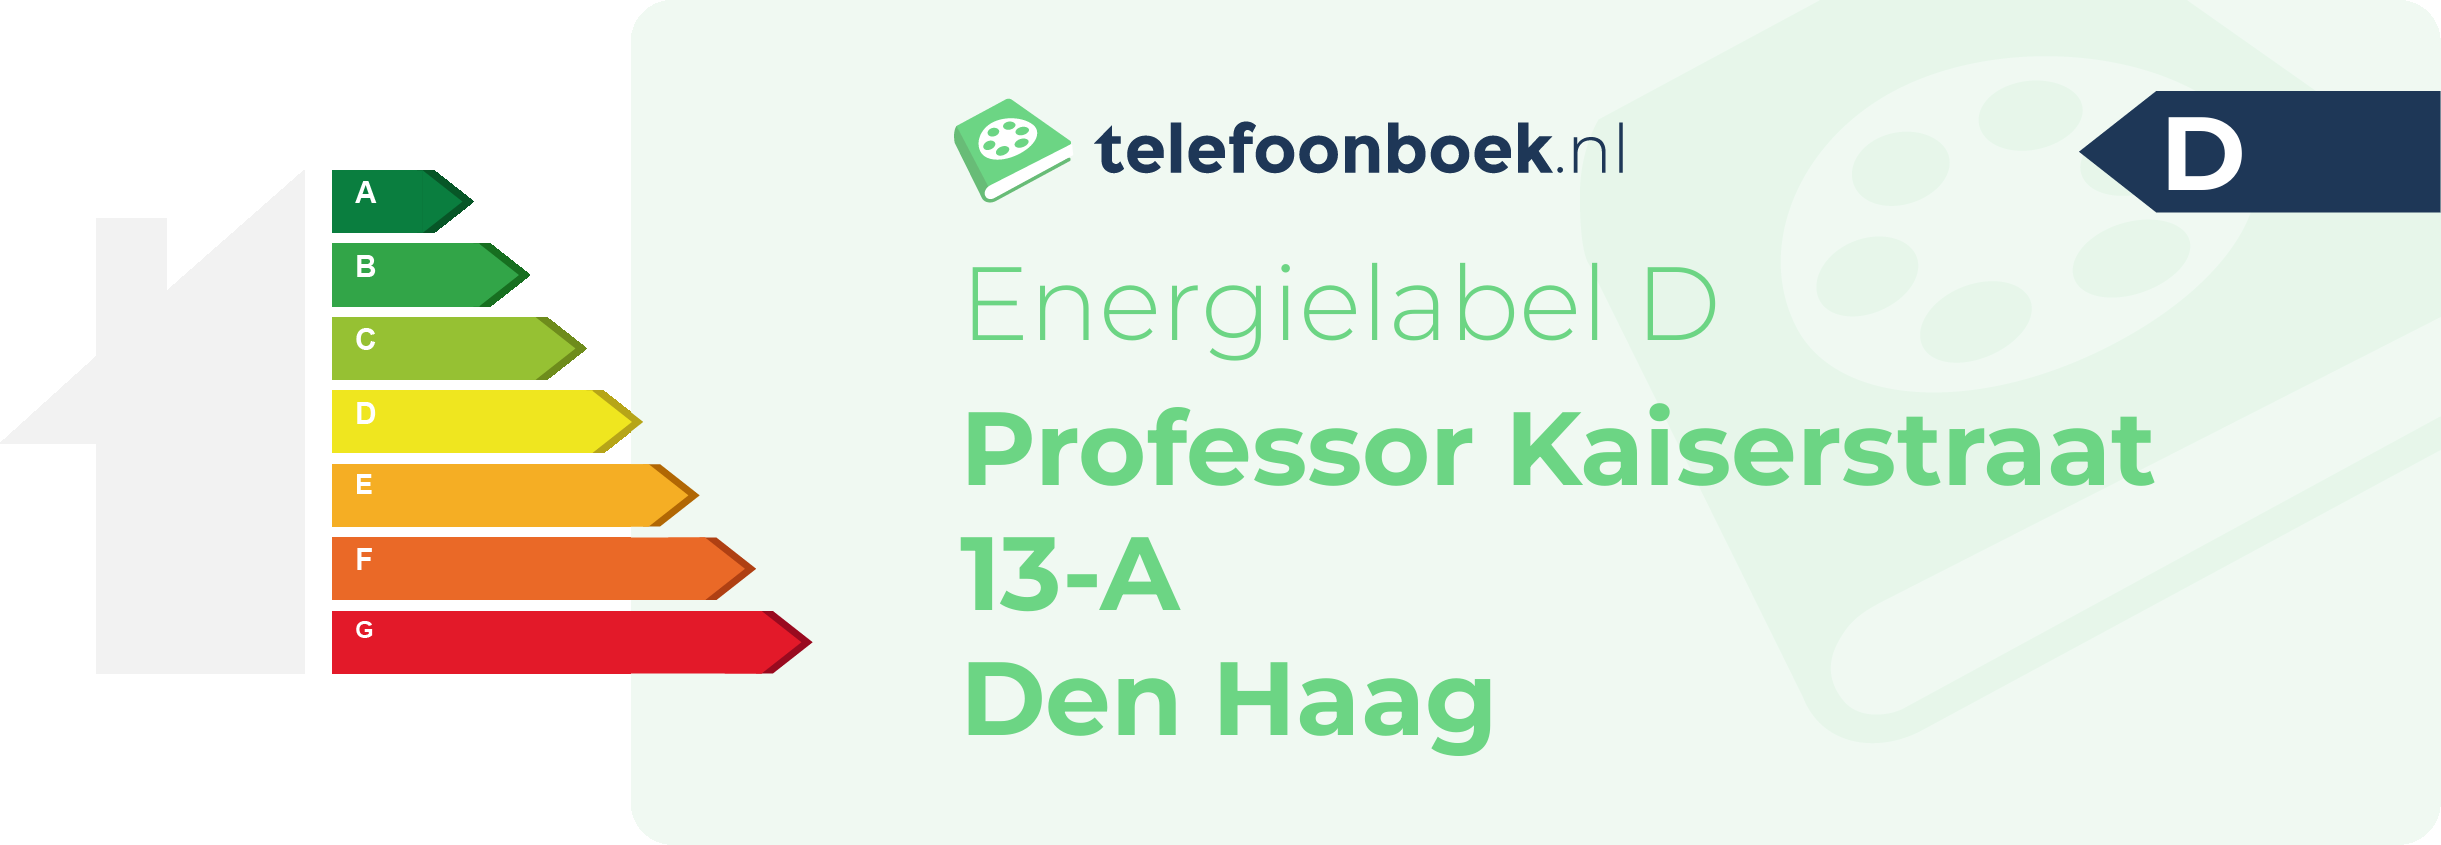 Energielabel Professor Kaiserstraat 13-A Den Haag